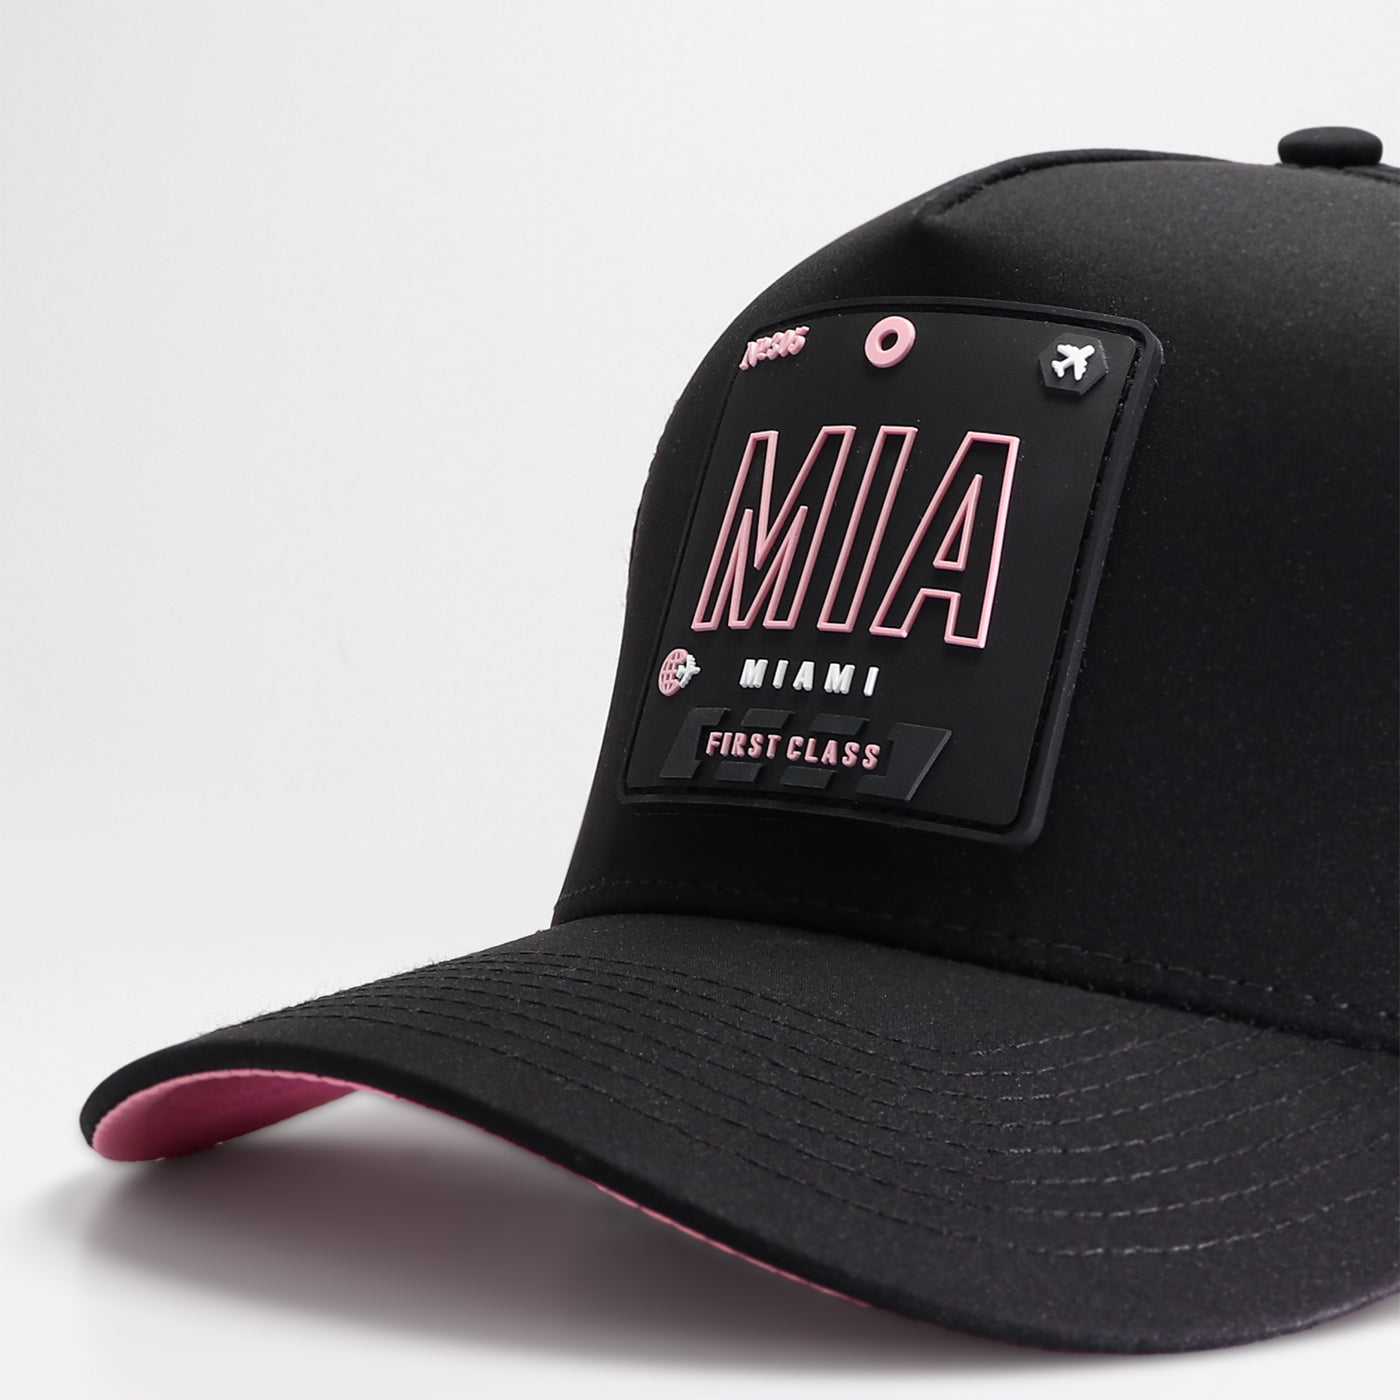 Miami Hat - Black/Pink